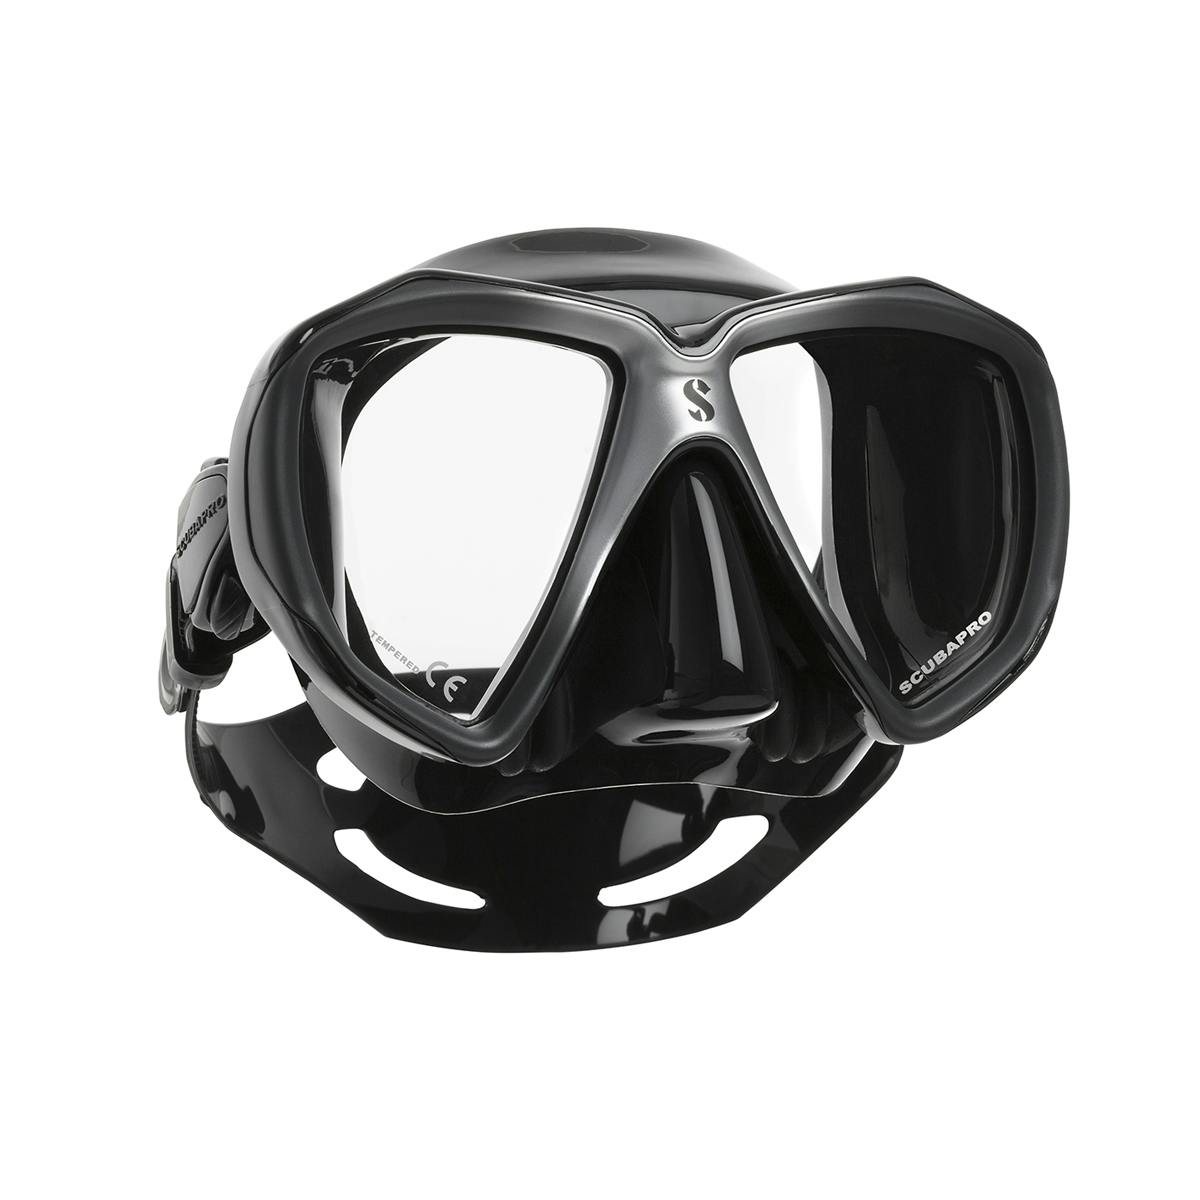 ScubaPro Spectra Mask, Two Lens - Black/Silver